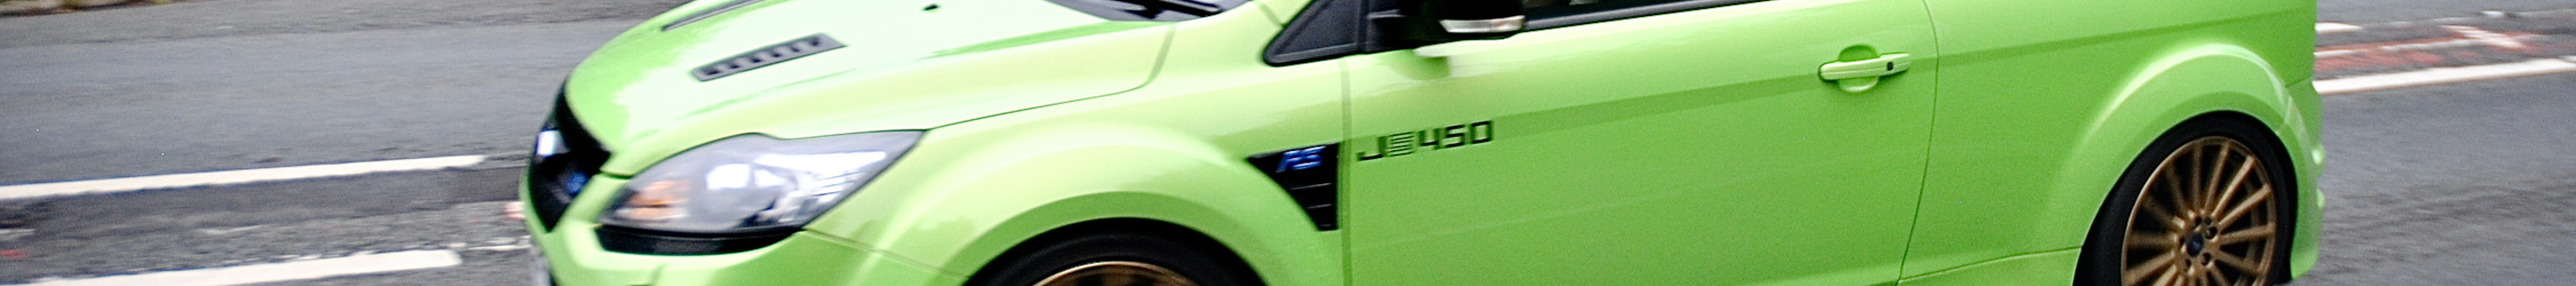 Ford Focus RS 2009 Jamsport JS450